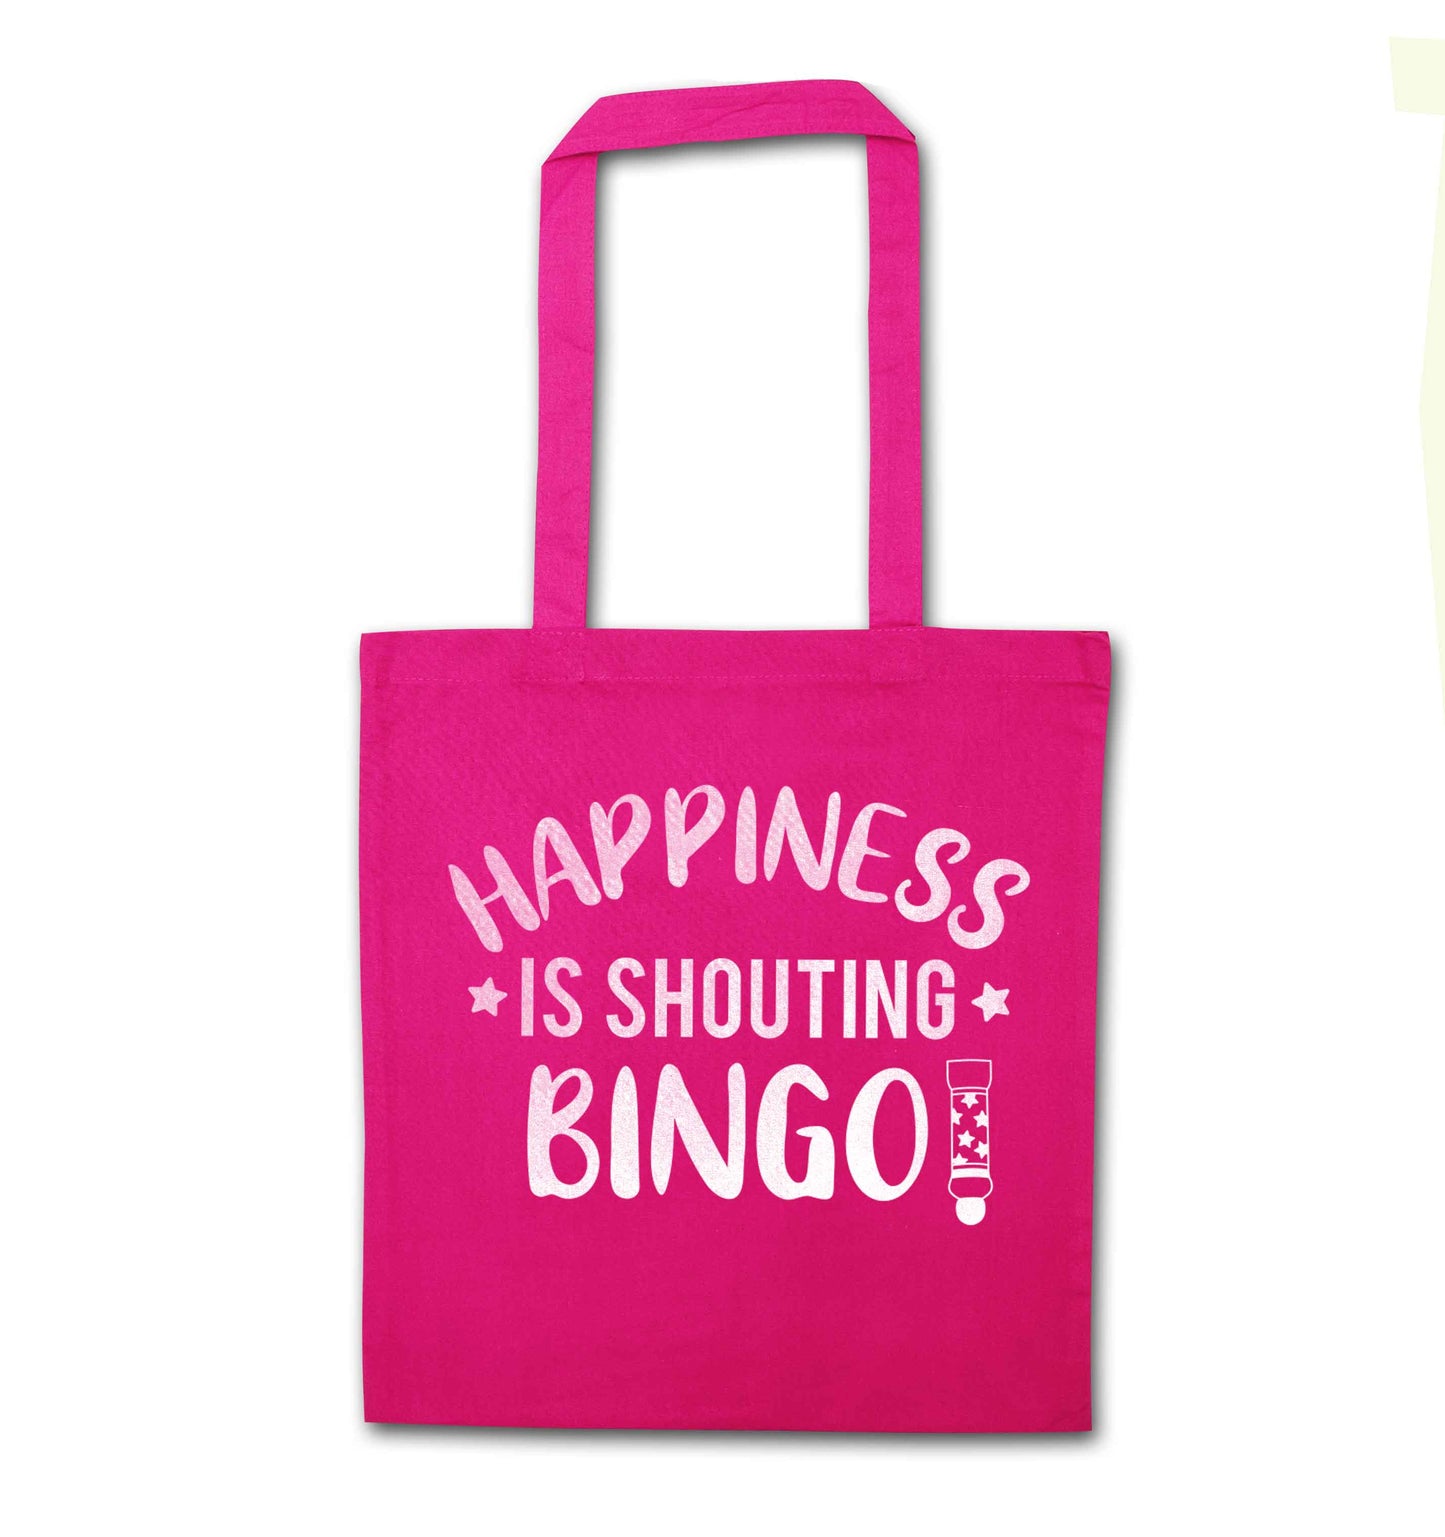 Happiness is shouting bingo! pink tote bag